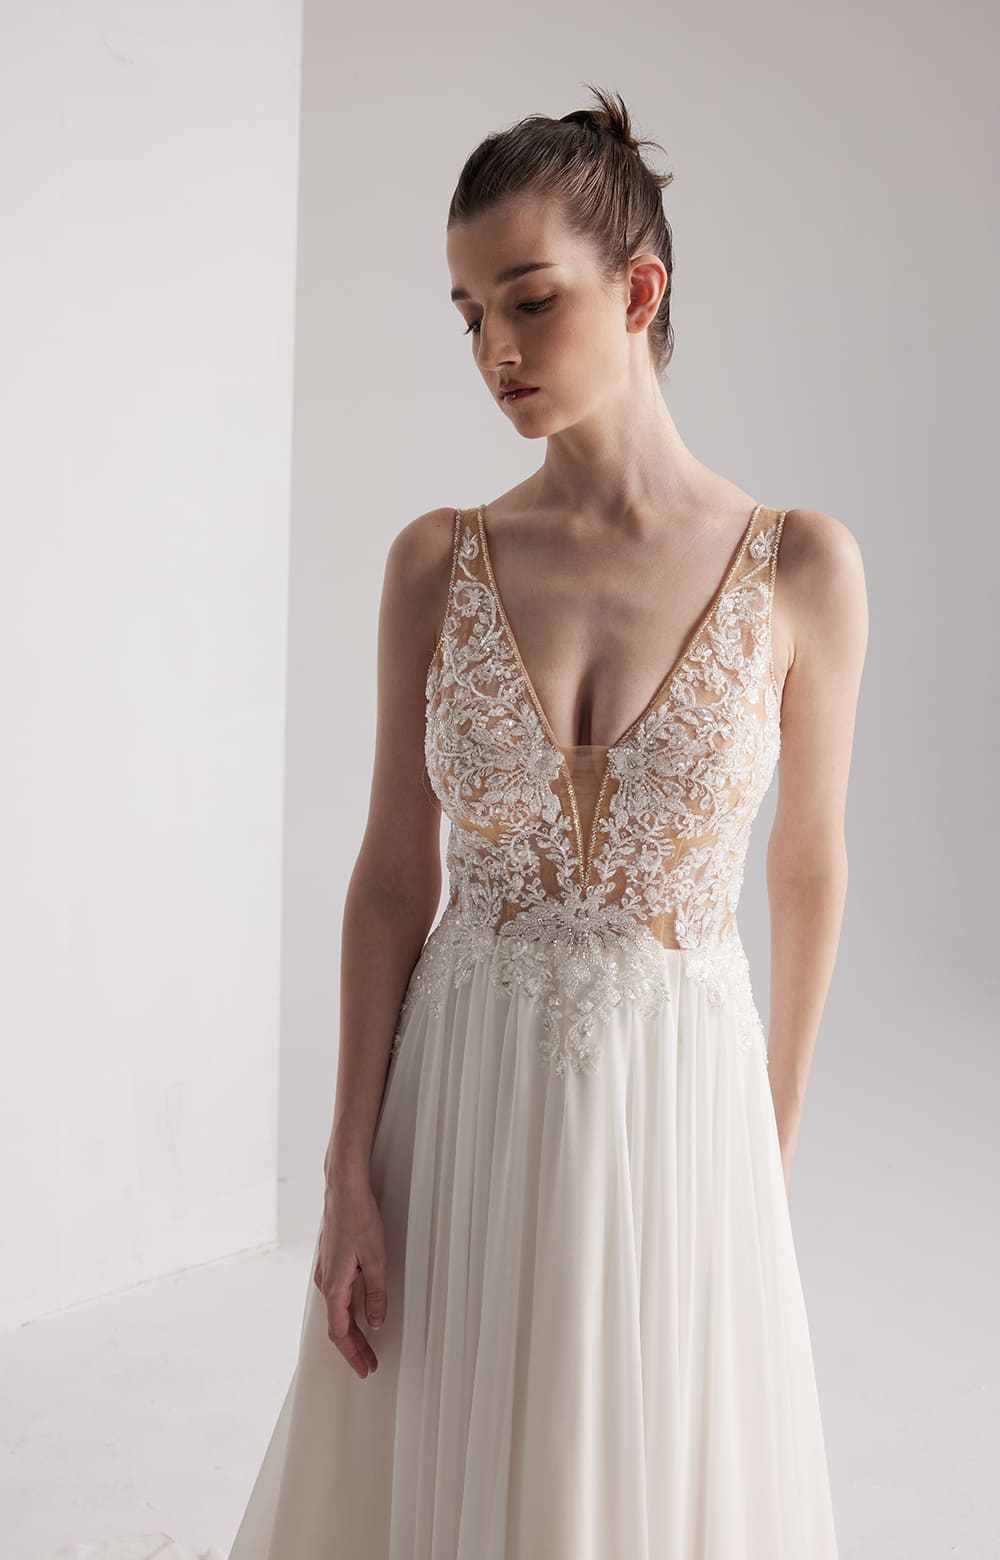 Designer wedding dress 2024swd14